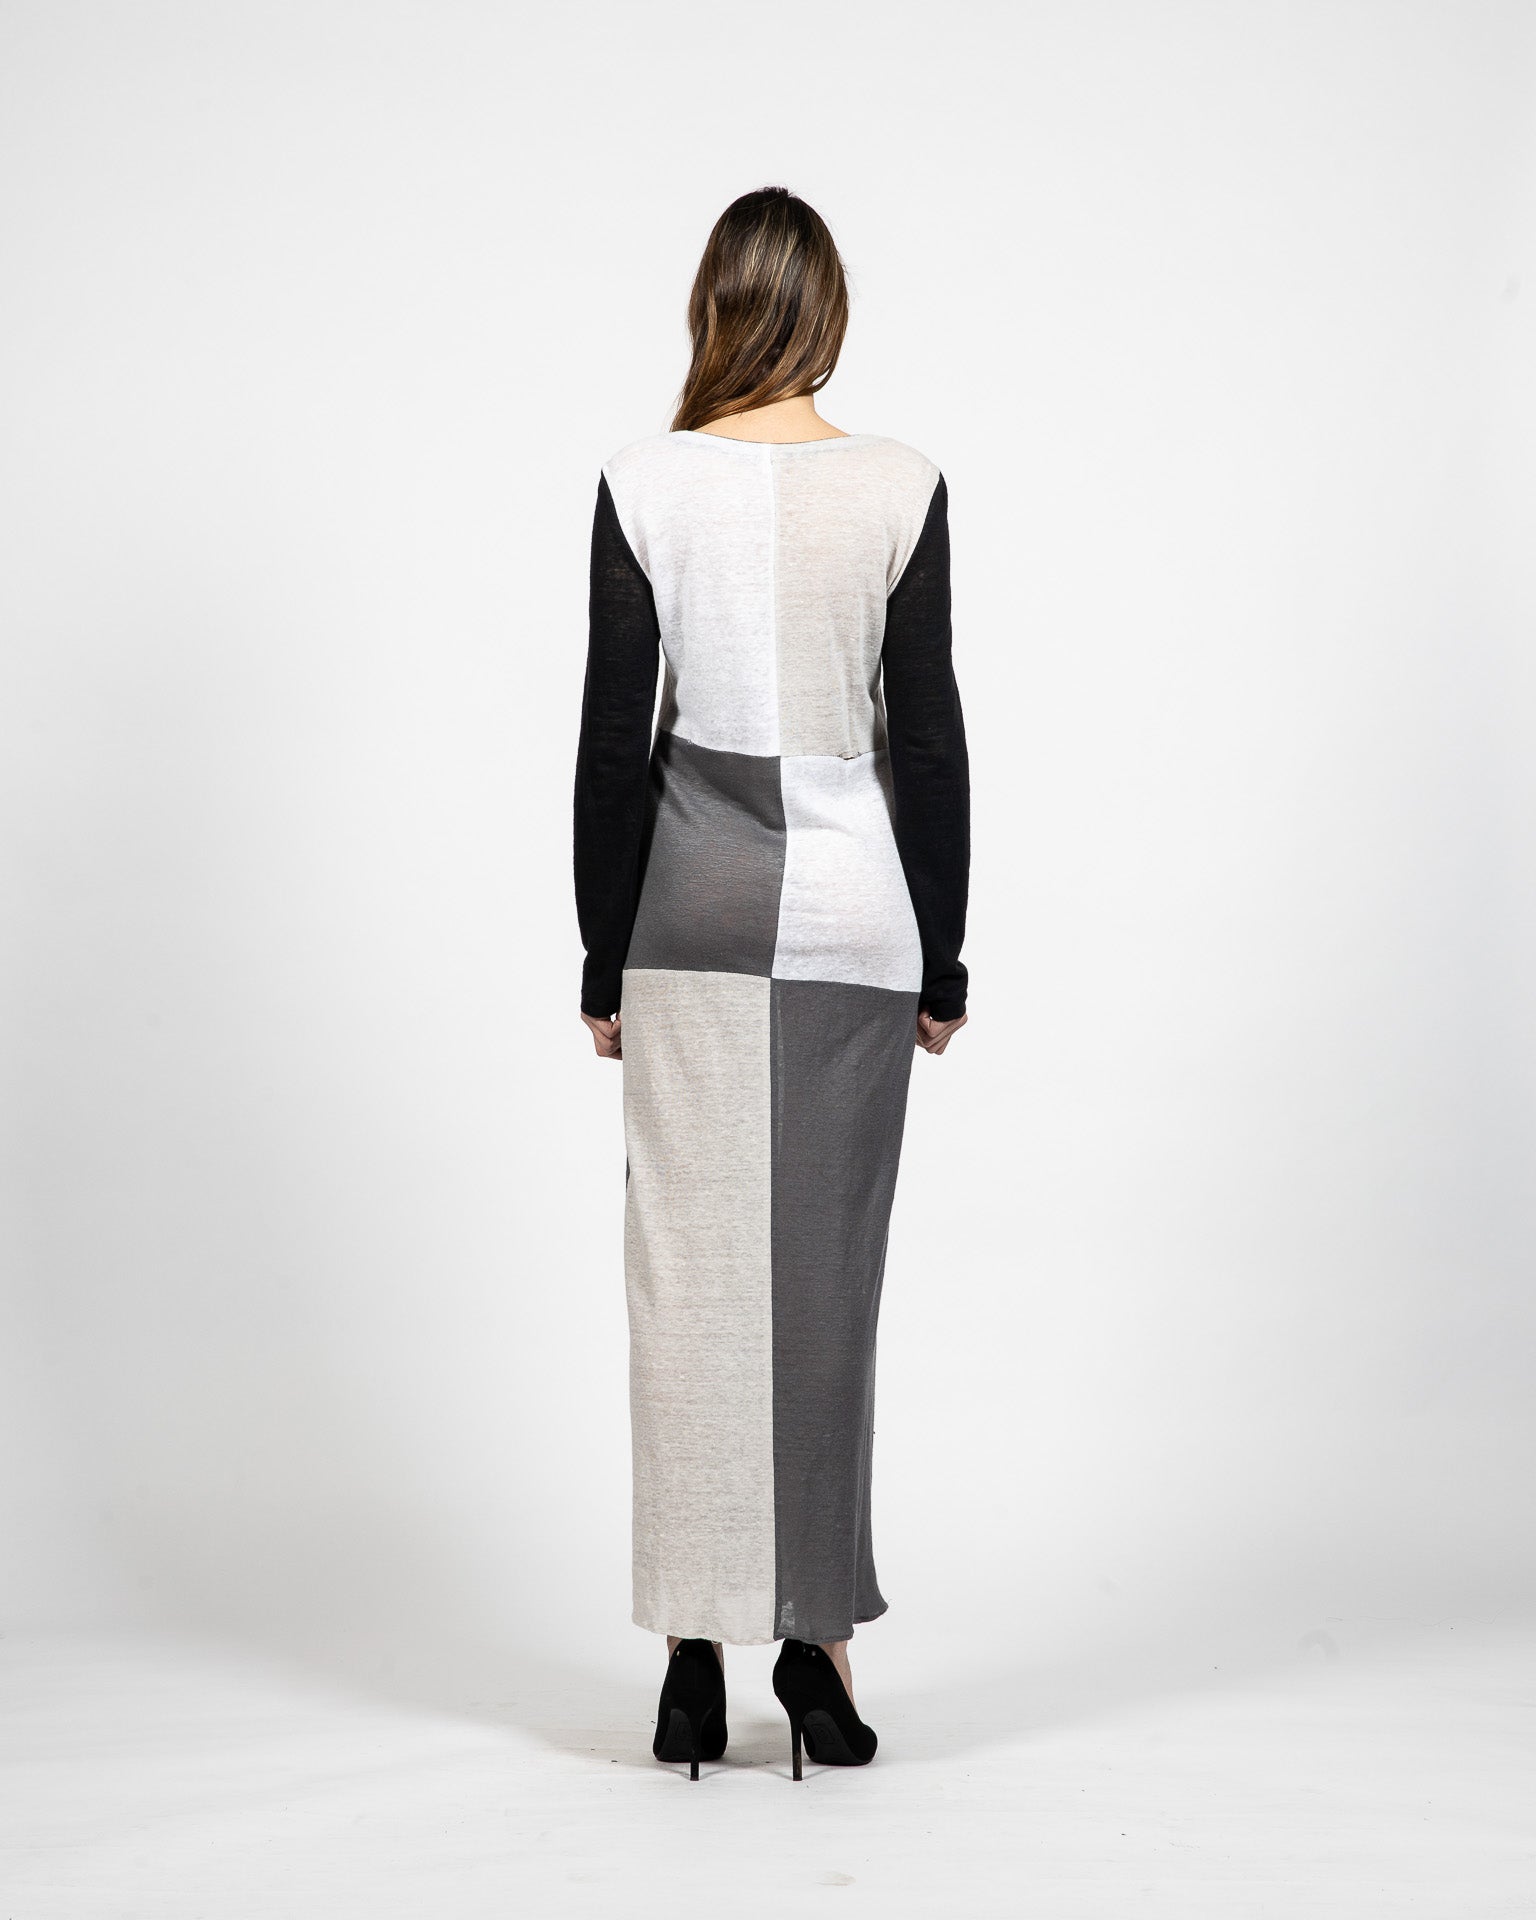 Maxi Loose Fit Linen Dress - Back View - Samuel Vartan